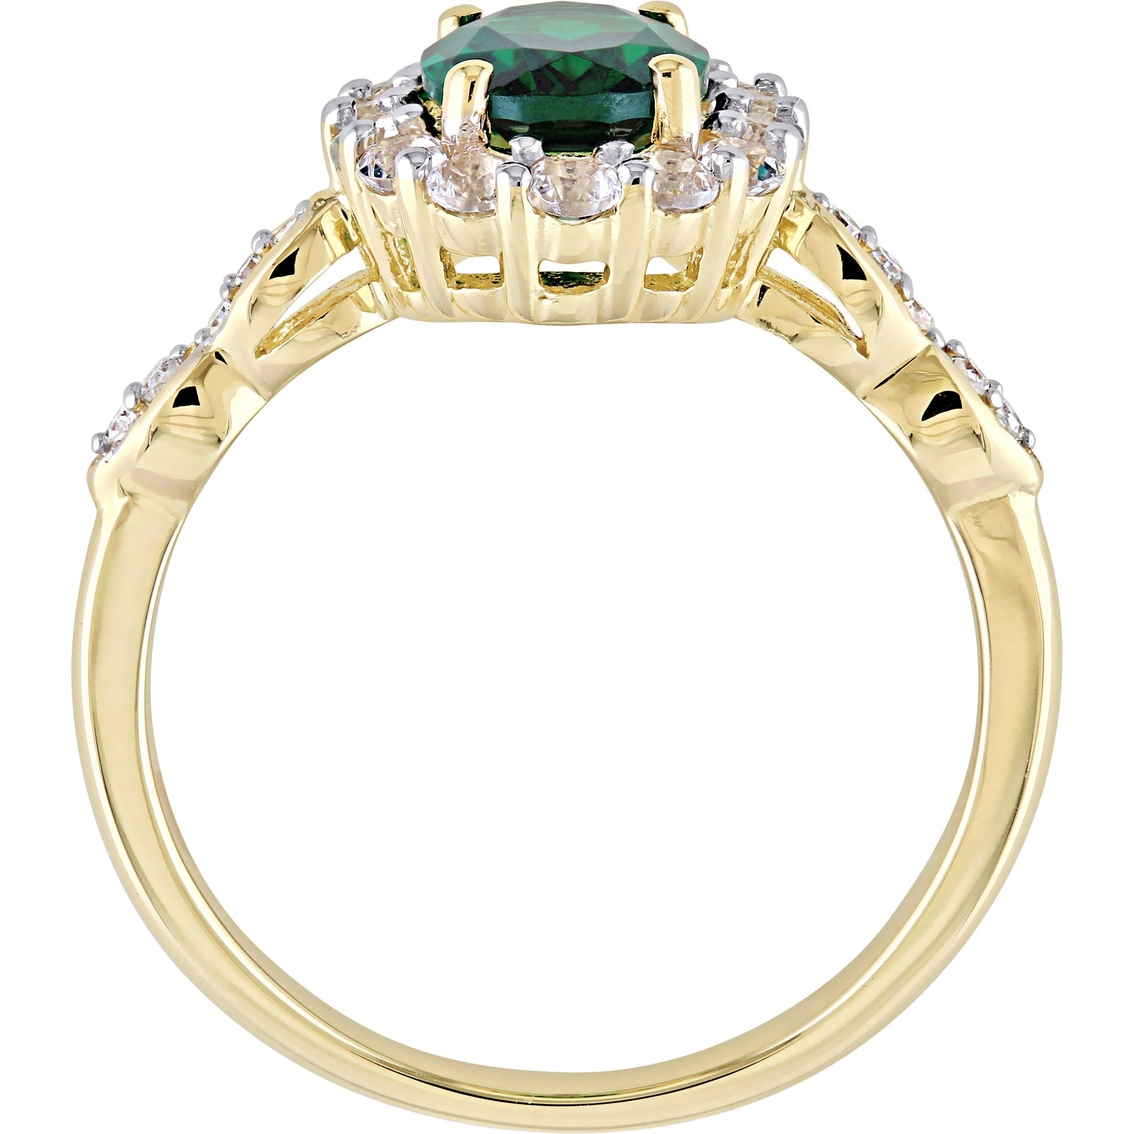 Sofia B. 14K Yellow Gold Diamond Accent Created Emerald White Topaz Vintage Ring - Image 2 of 4